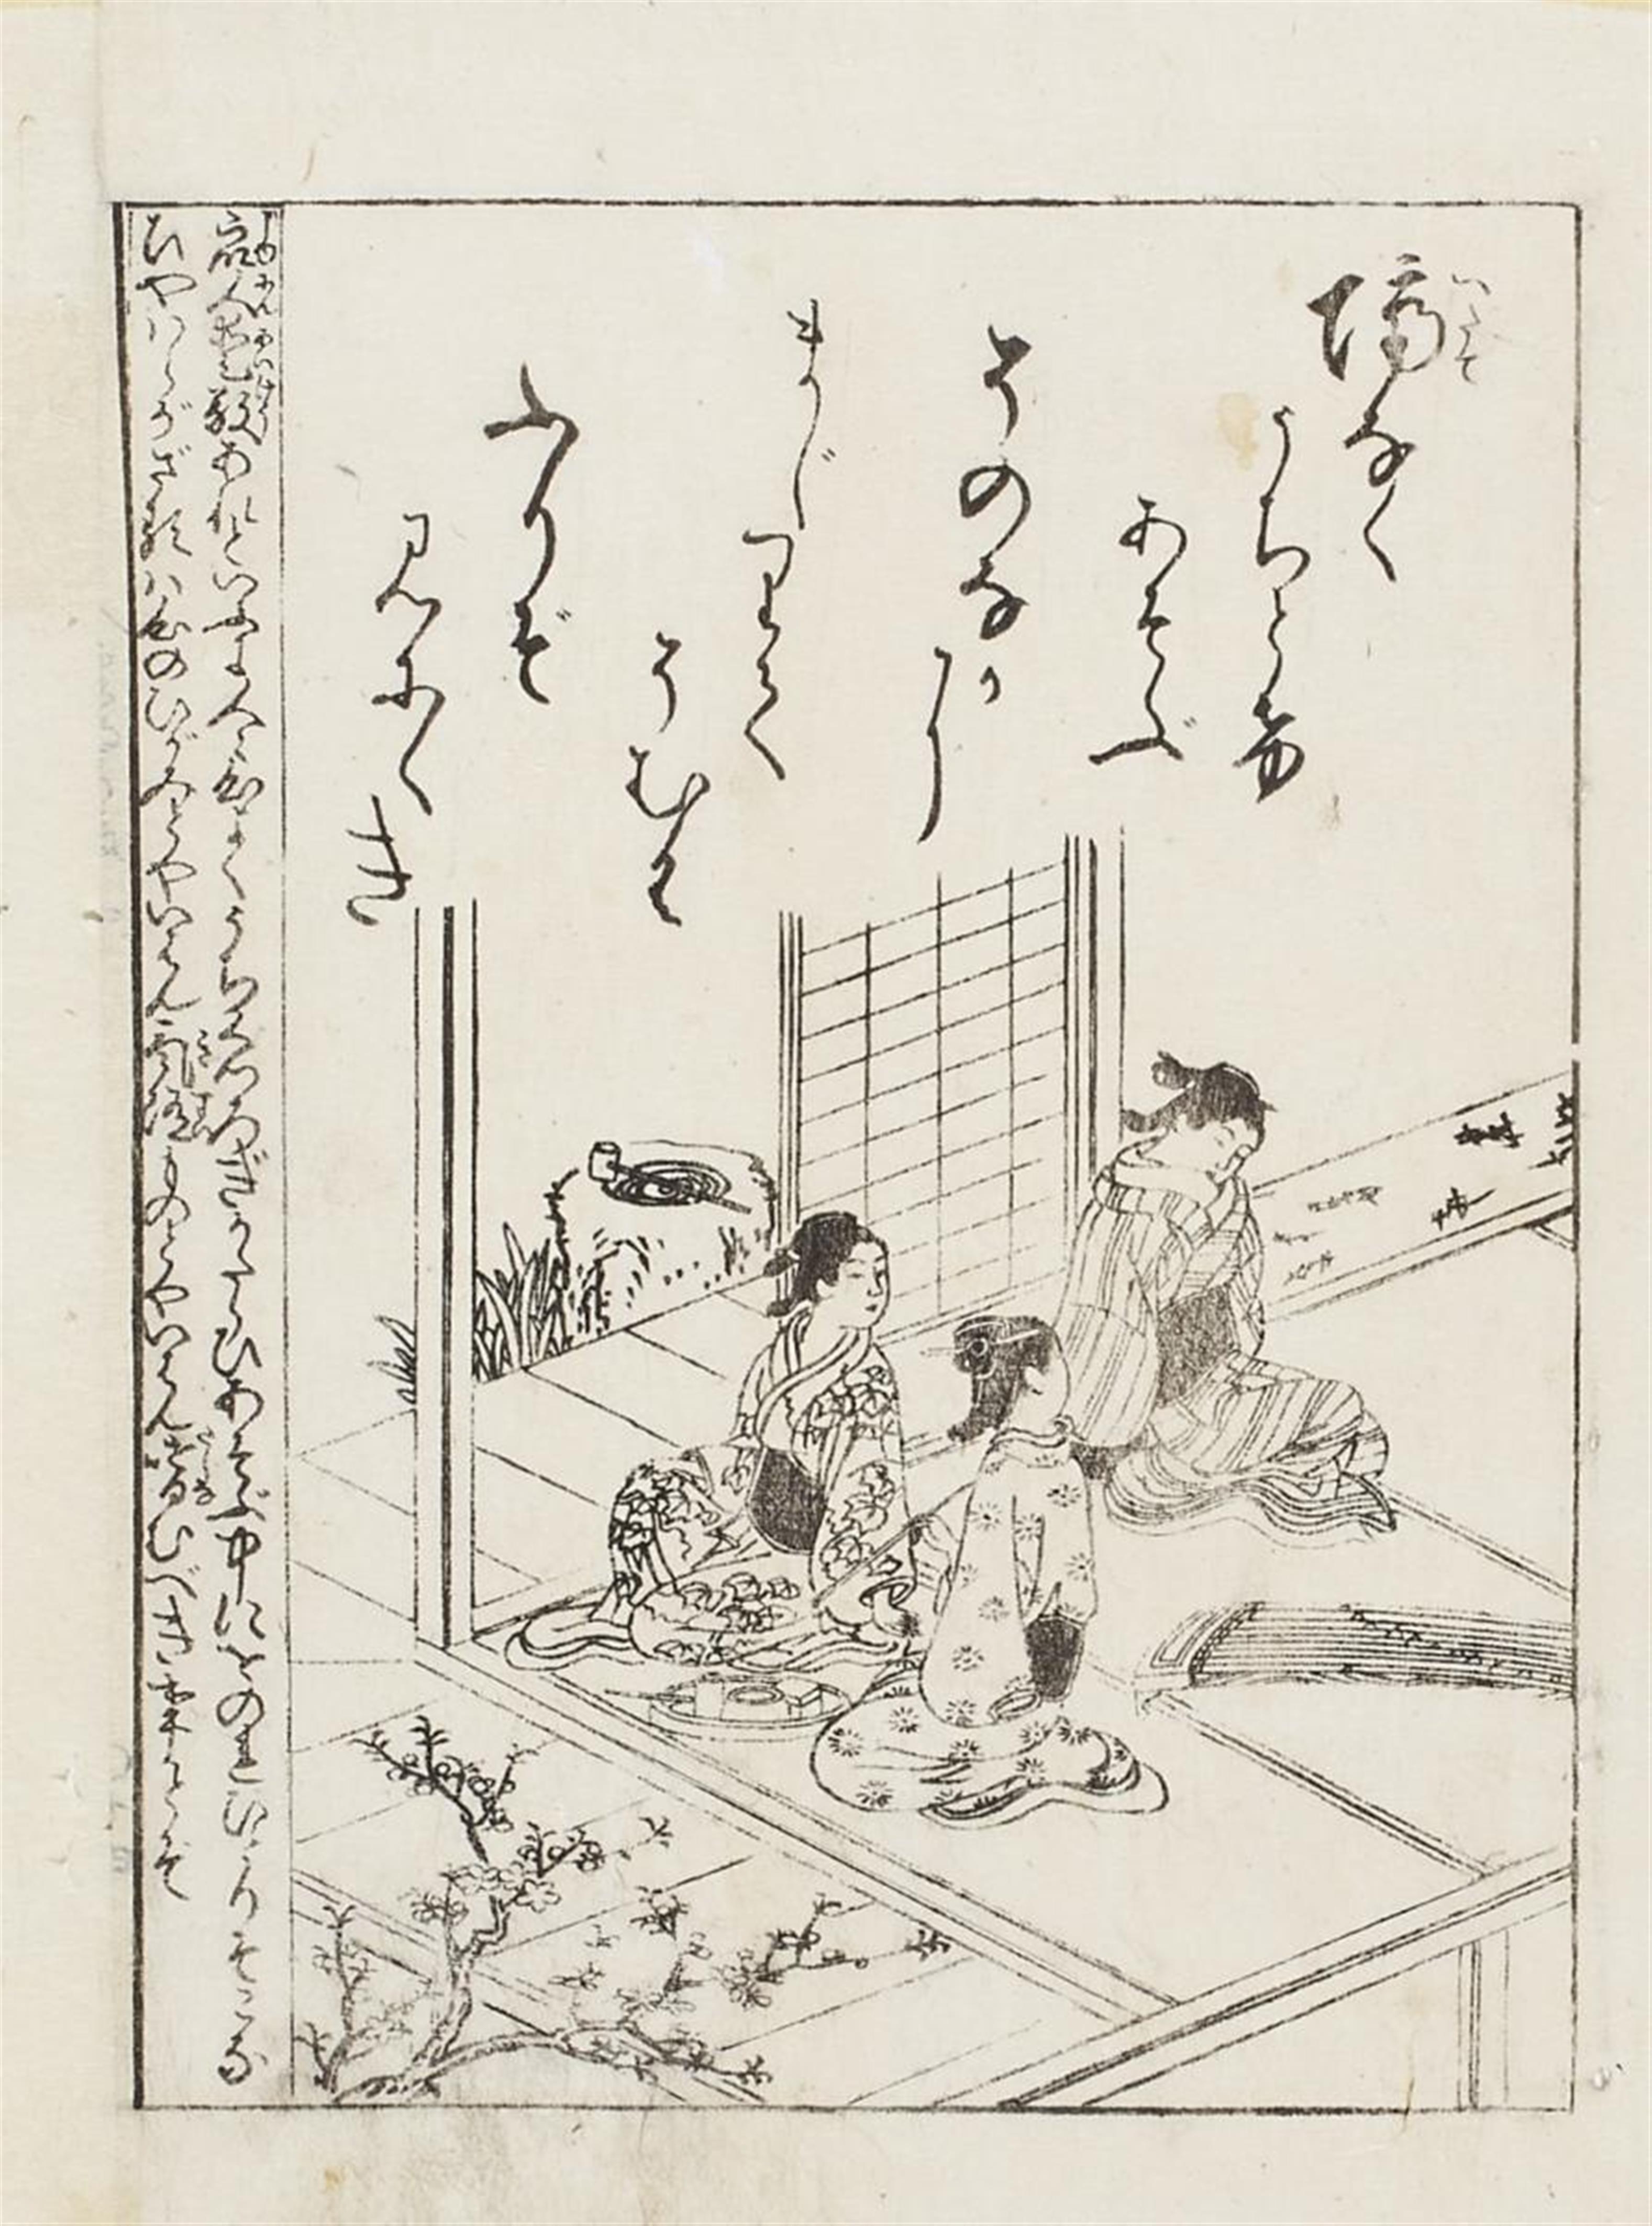 Sukenobu Nishikawa
other artists - Nishikawa Sukenobu (1671-1751) and other artists of the 18th century - image-5